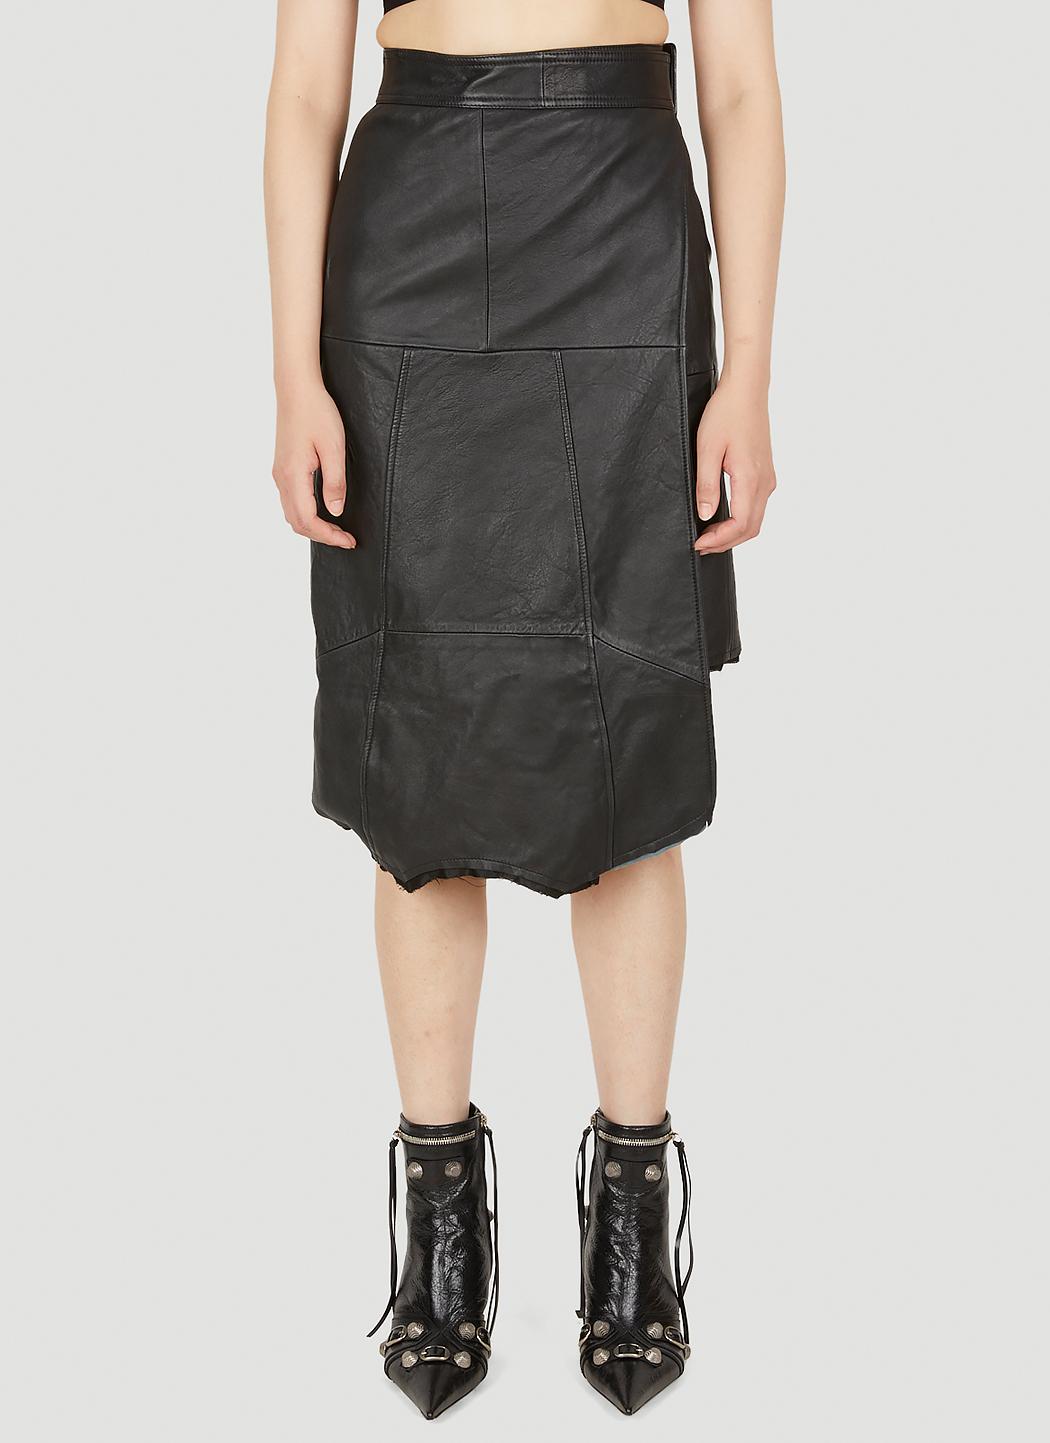 Balenciaga Upcycled Skirt in Black Lyst